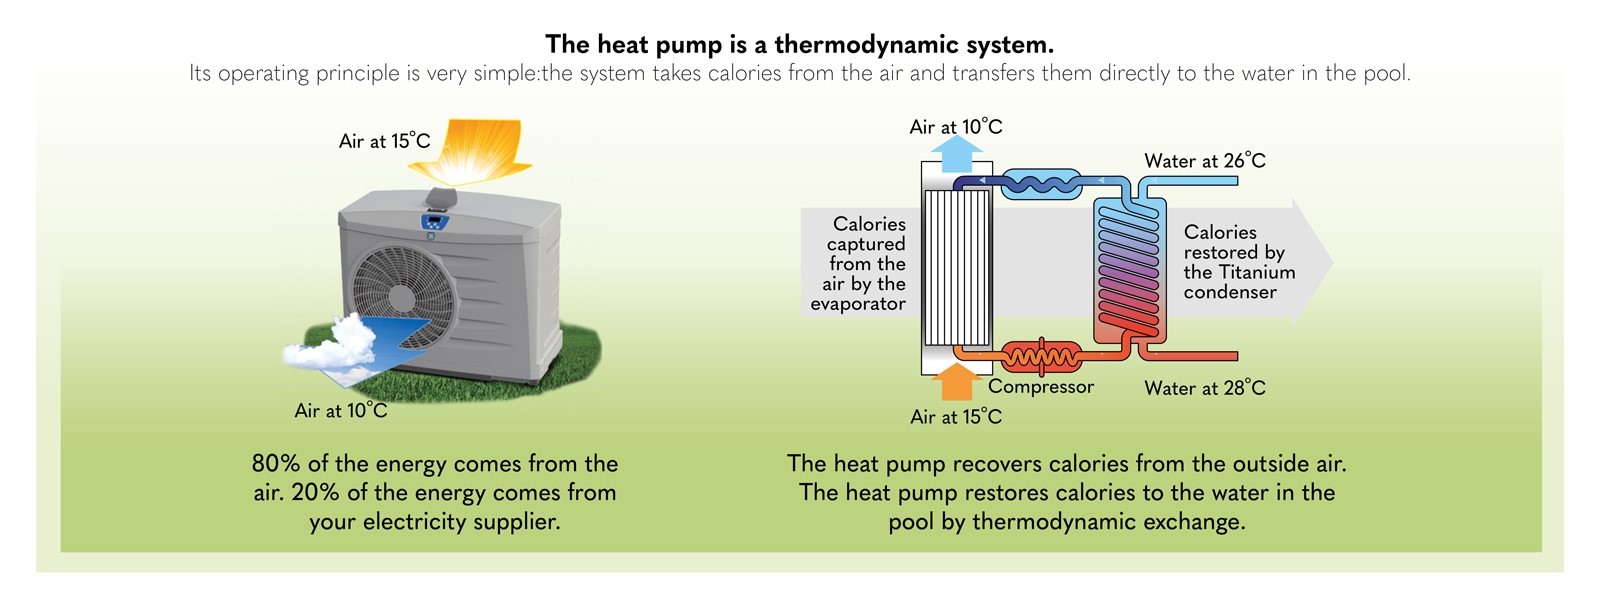 Heat Pump Thermodynamic System